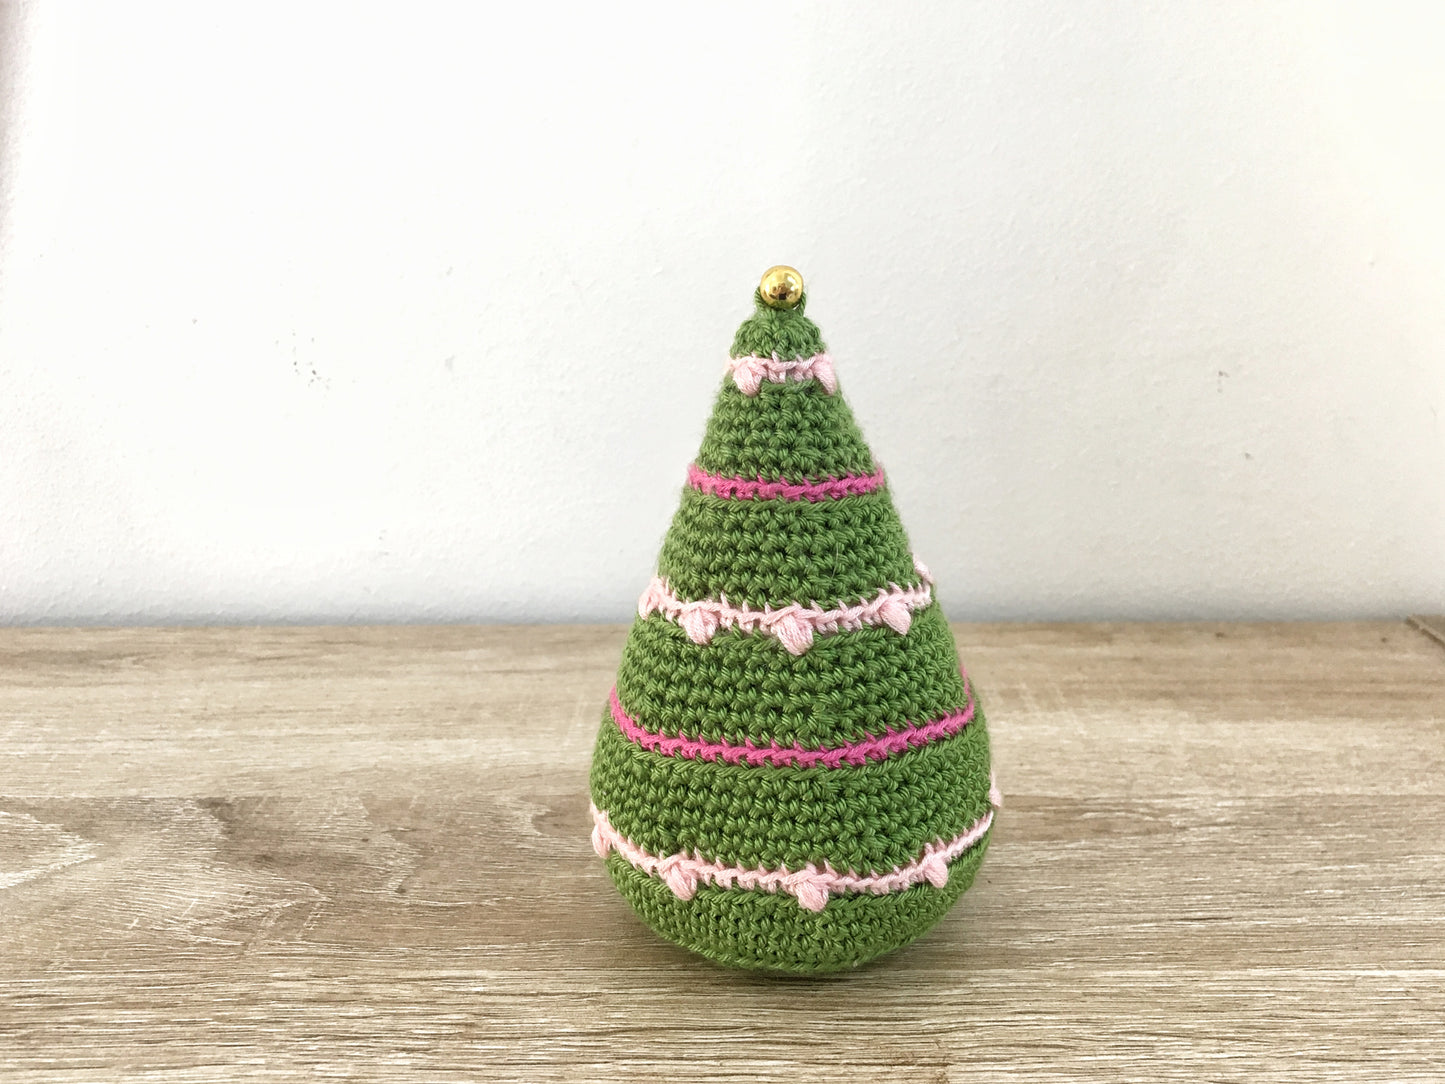 Tiny Lights Christmas Tree Crochet Pattern by Agat Rottman